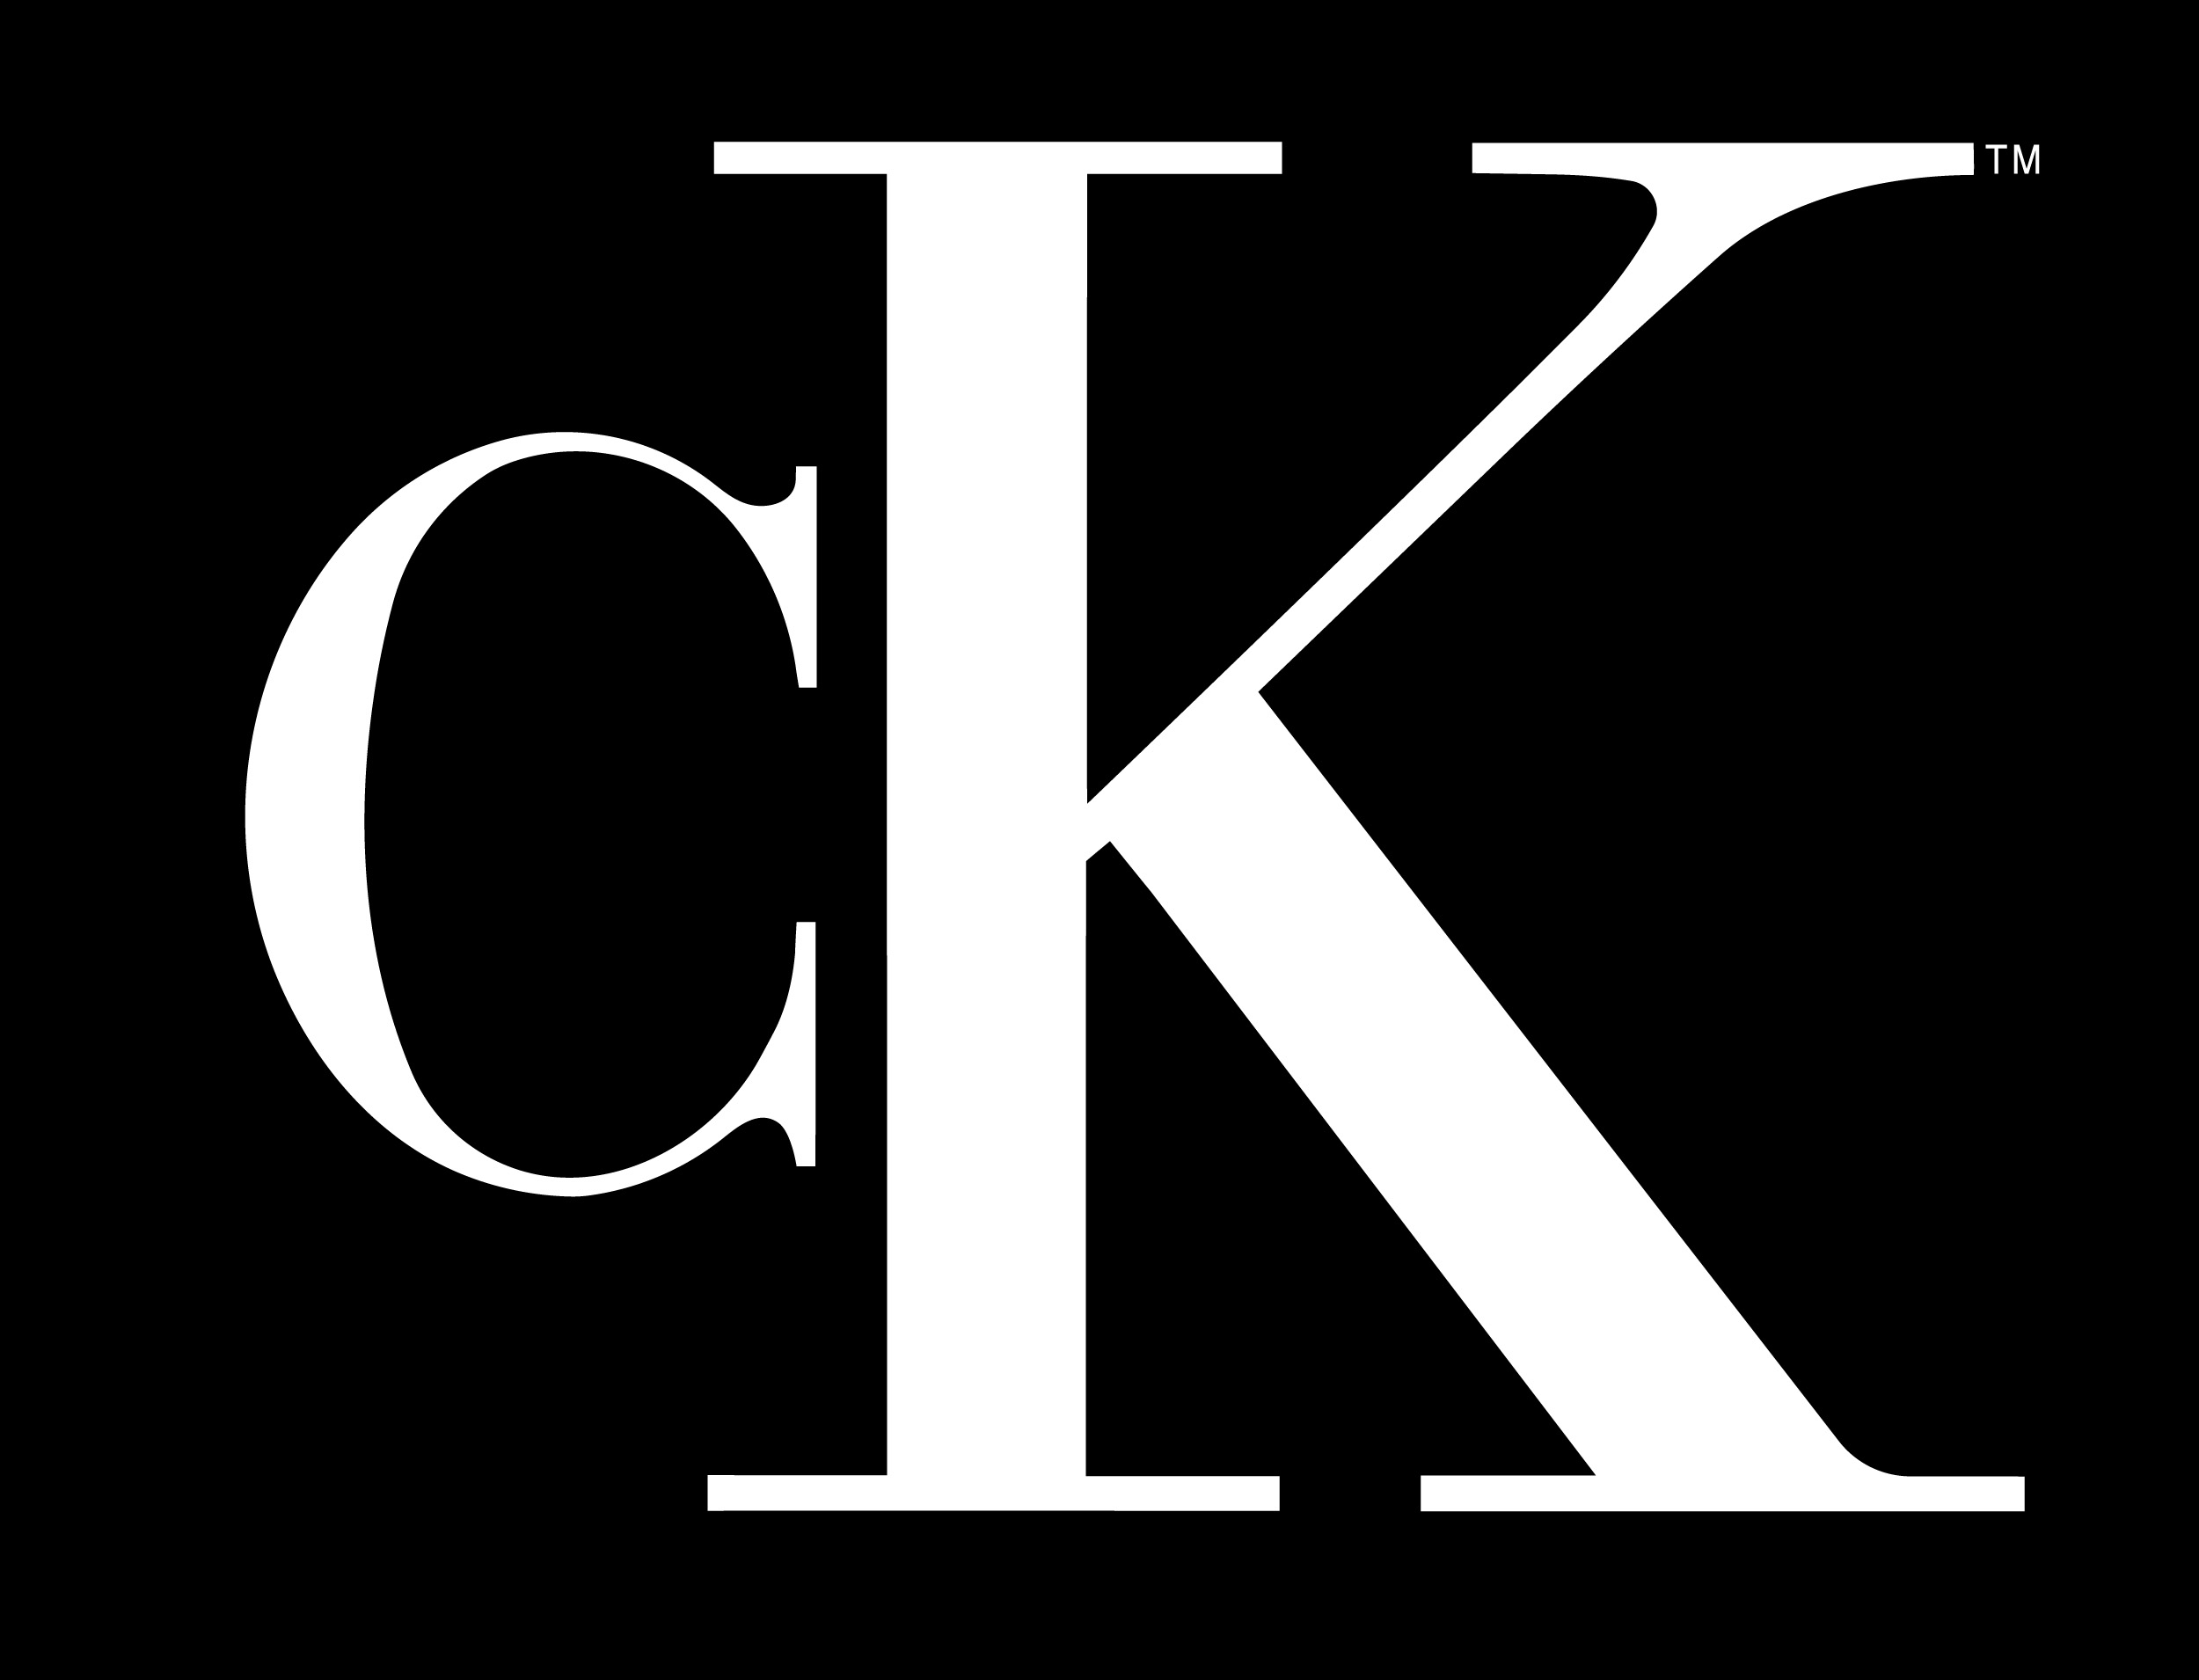 ck brand